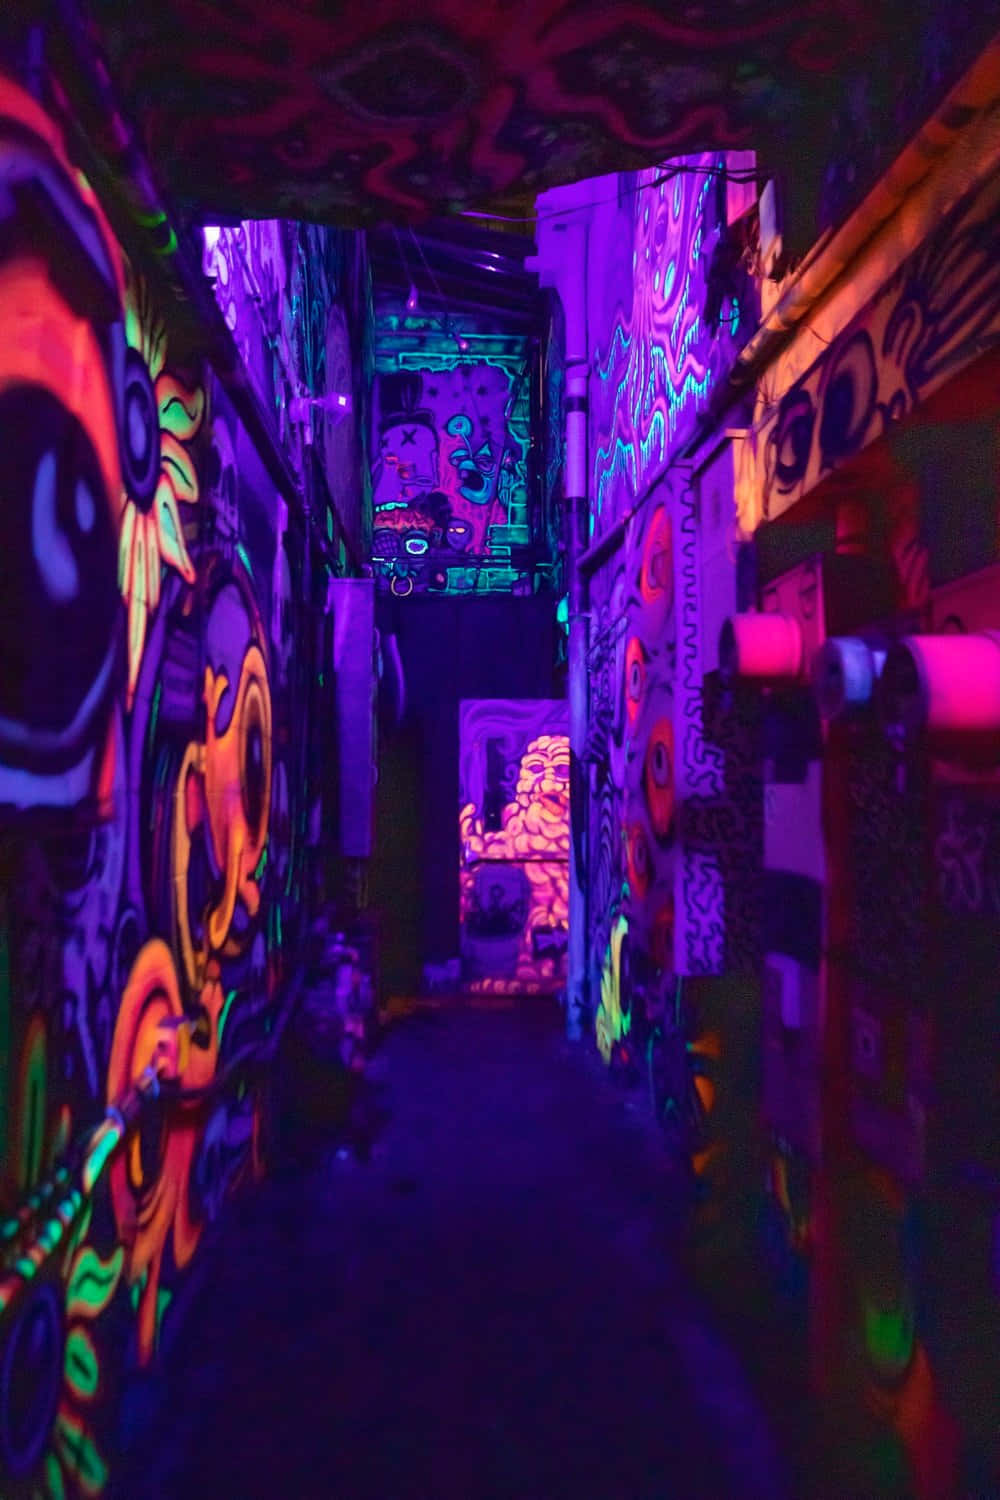 “Explore a Neon-Infused Landscape” Wallpaper